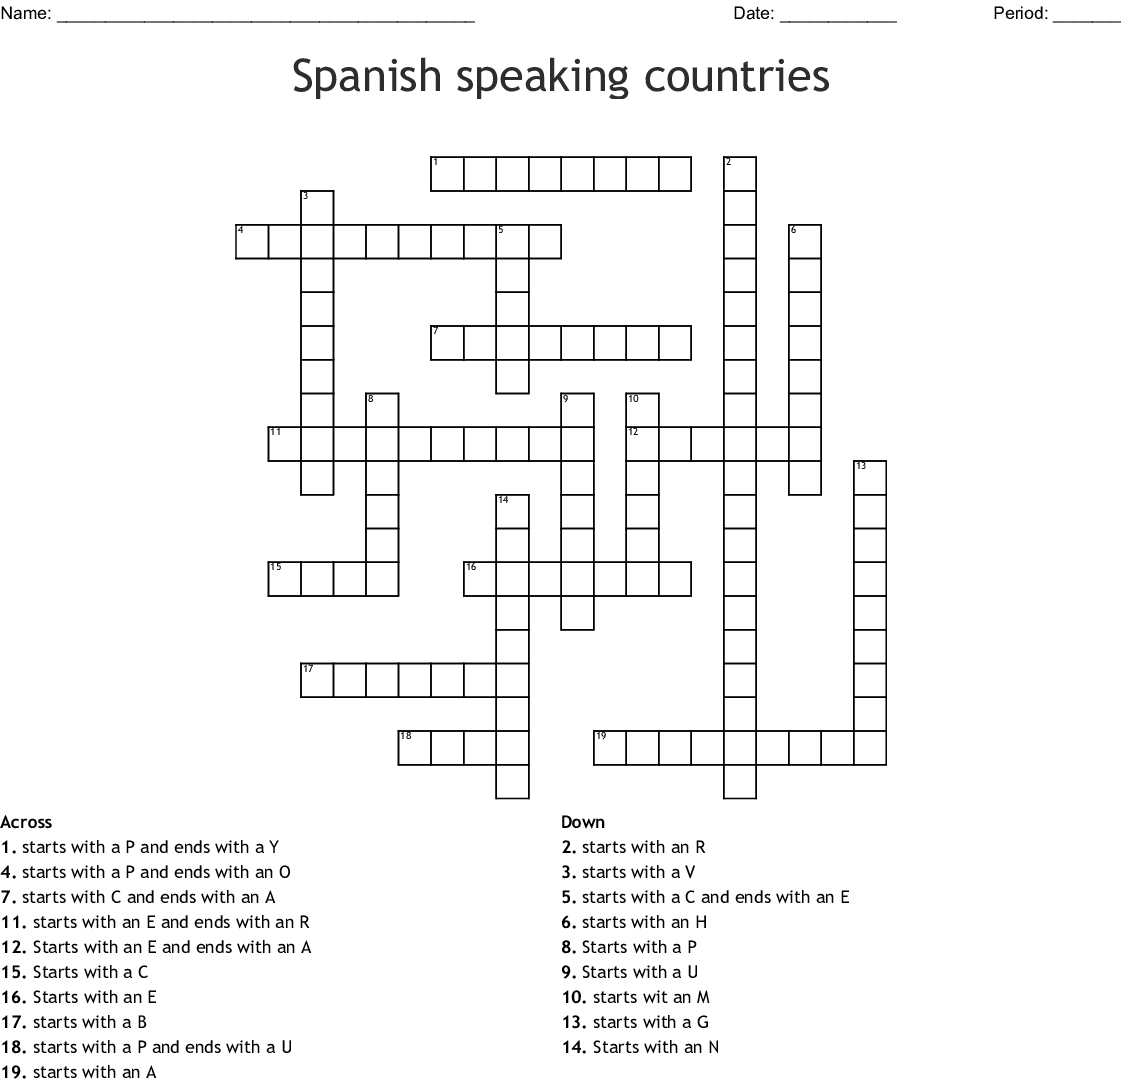 Printable Spanish Crossword Puzzle Answers